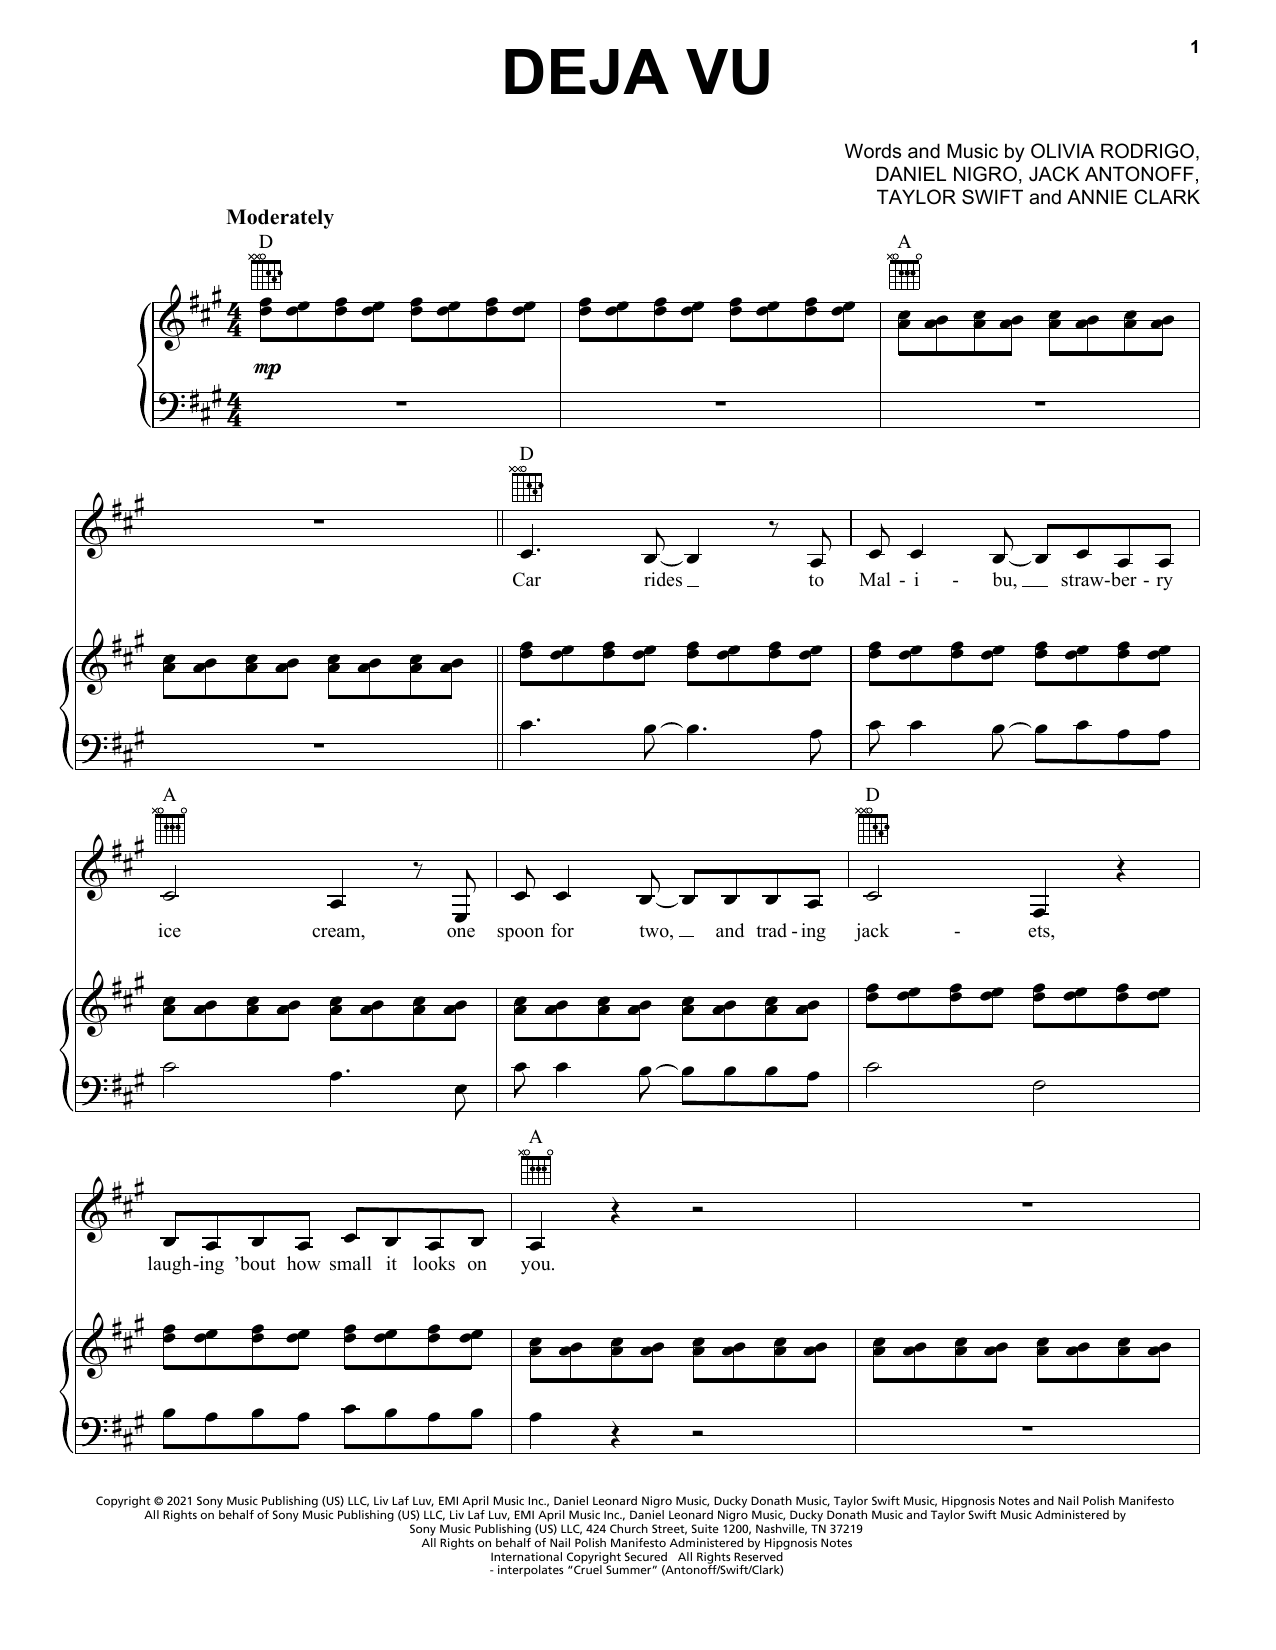 Download Olivia Rodrigo deja vu Sheet Music and learn how to play Ukulele PDF digital score in minutes